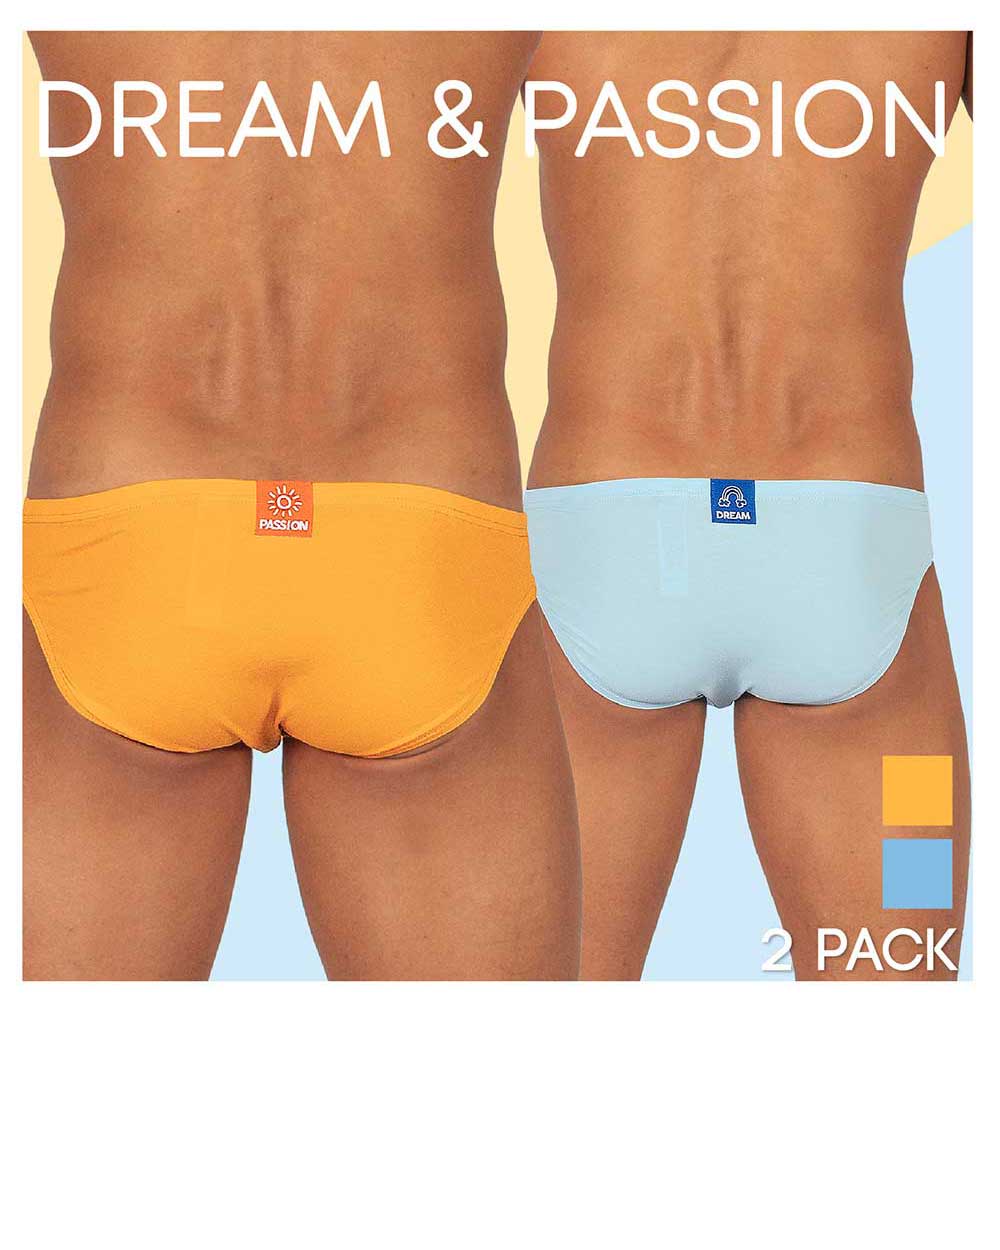 PRD Bikini Dream & Passion - 2 Pack - [4384]